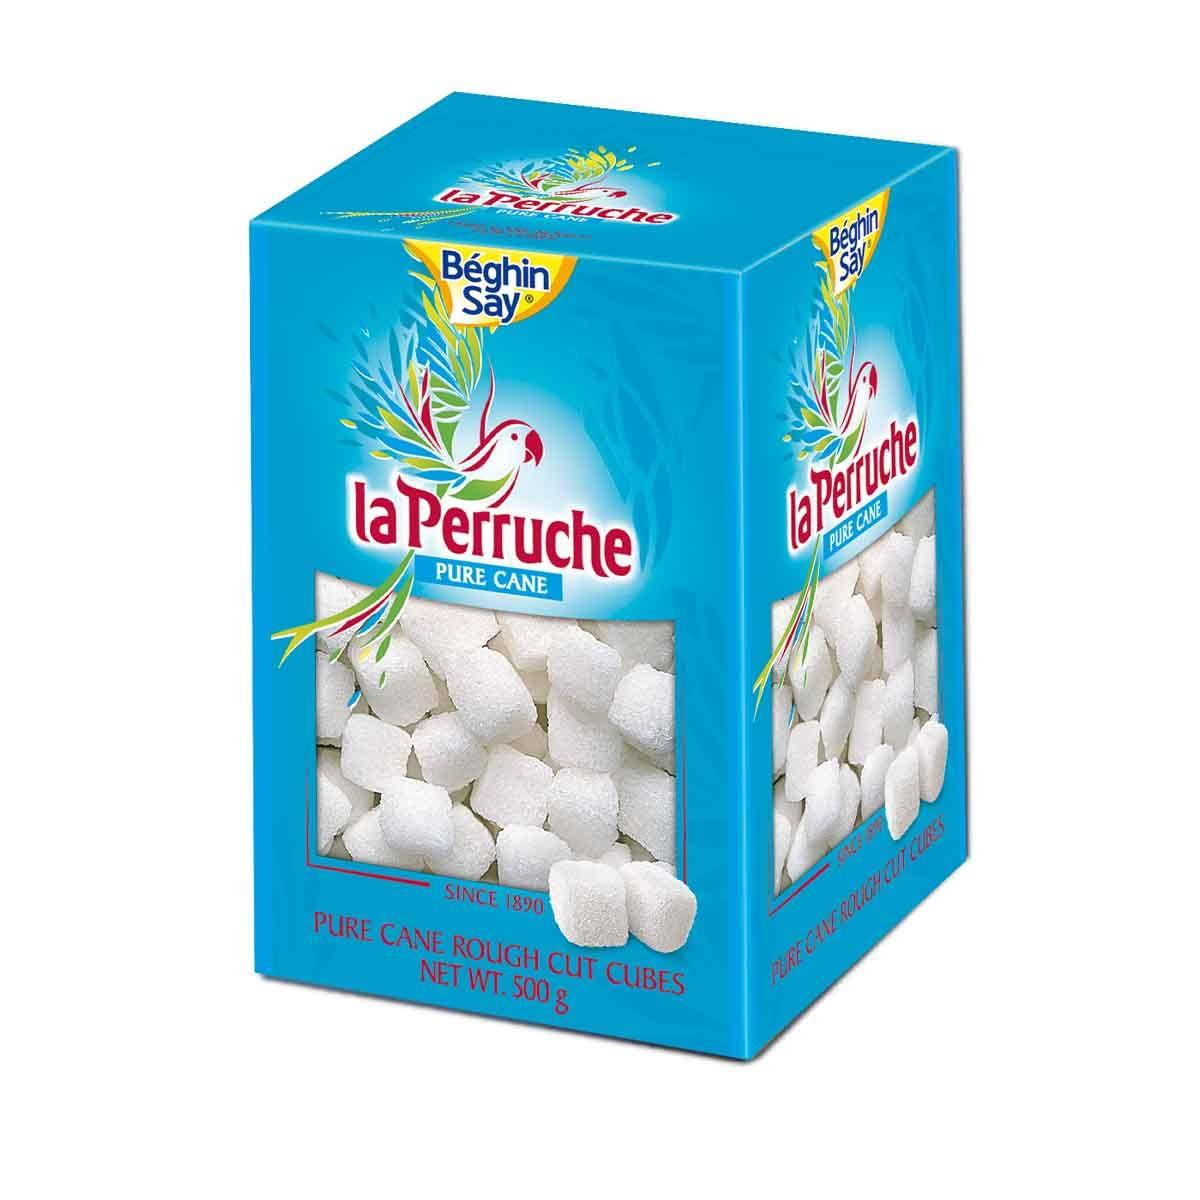 La Perruche - Rough Cut White Lump Sugar Cubes - 500g - Vending Superstore